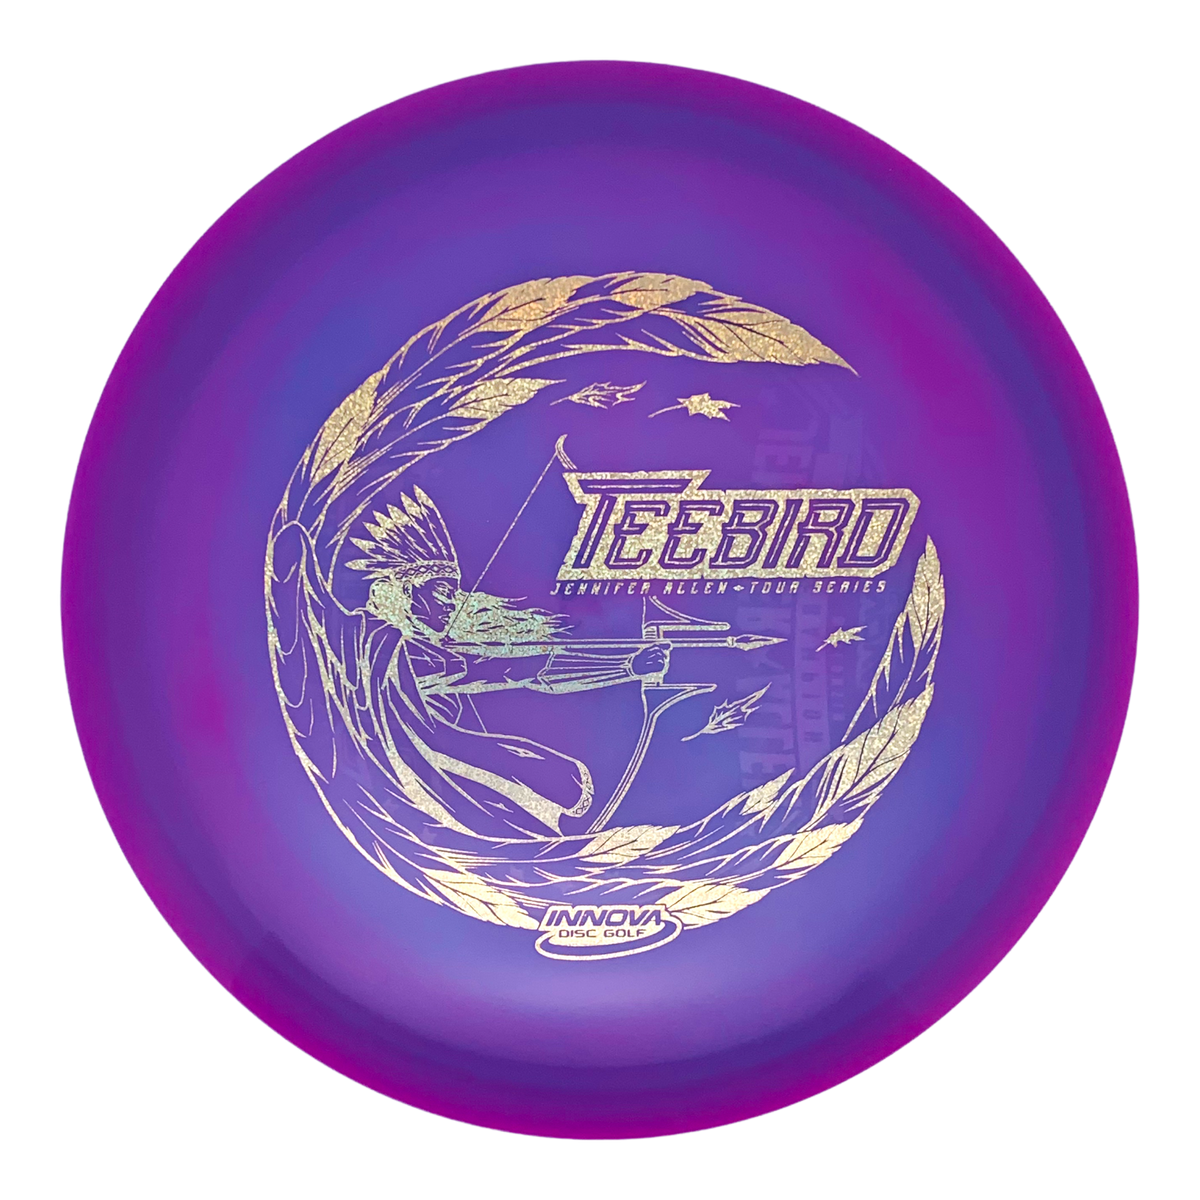 Innova Champion Color Glow Teebird - Jennifer Allen USWDGC Champion